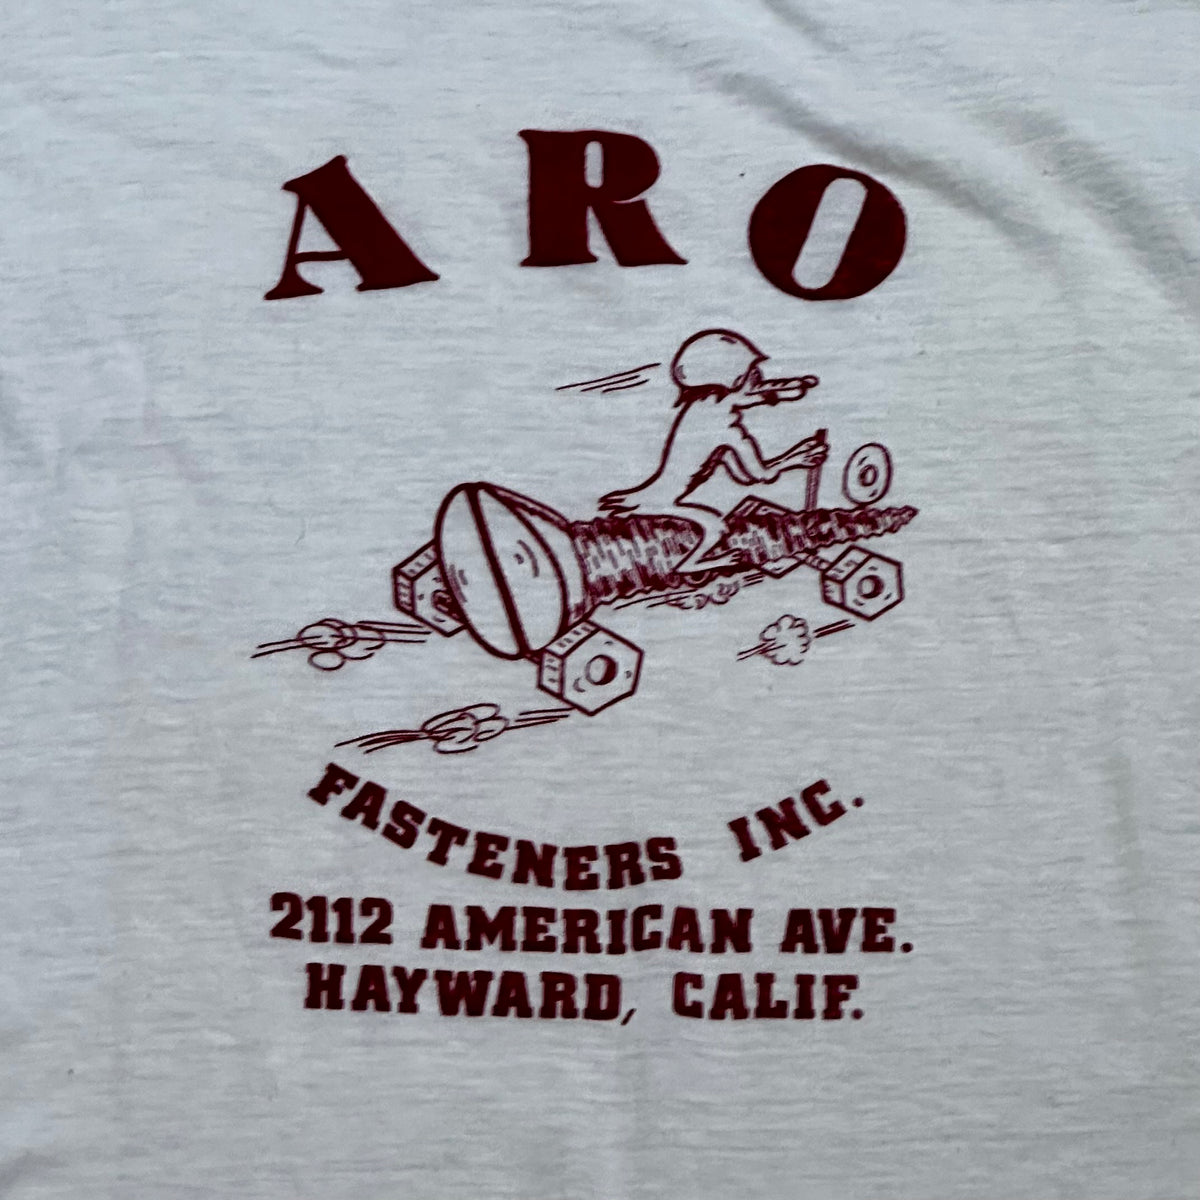 Vintage 70s ARO Fasteners Inc. t-shirt